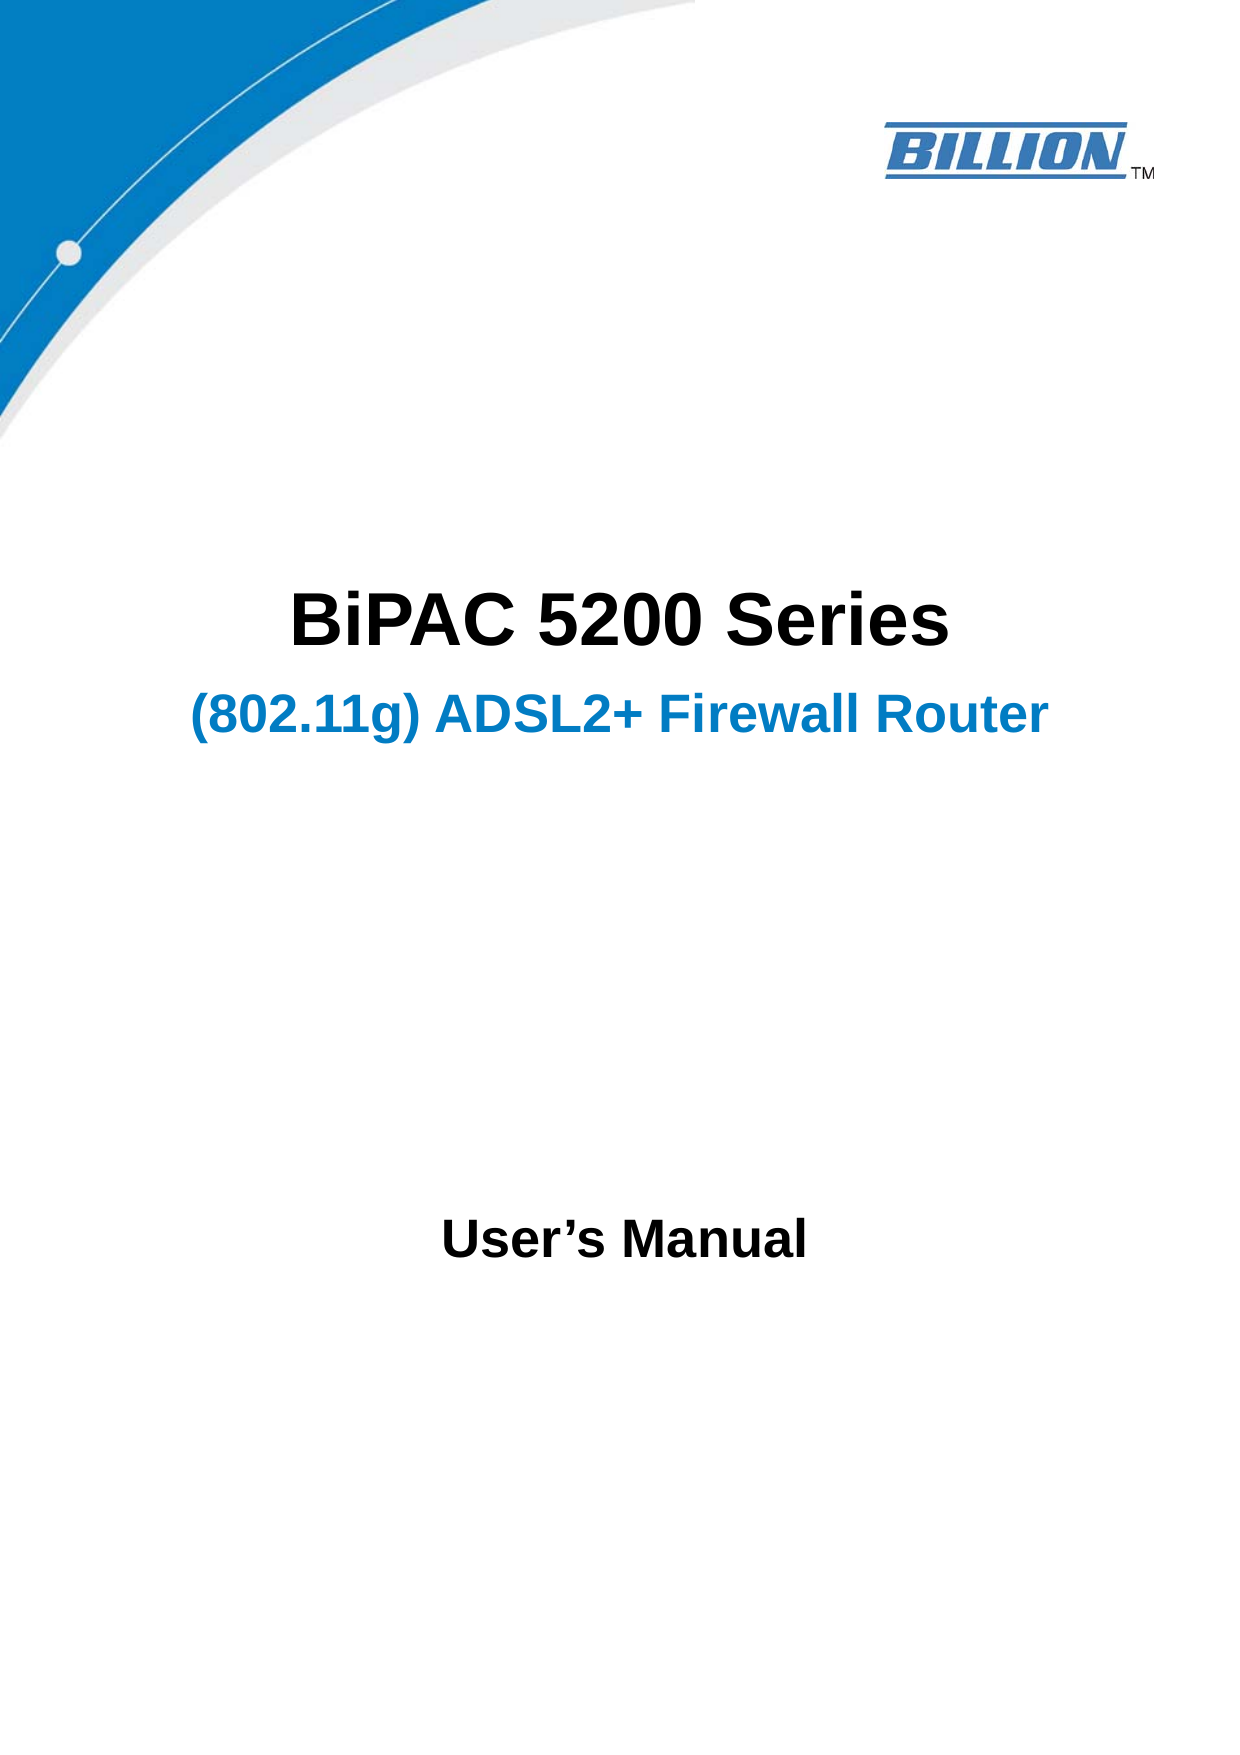    BiPAC 5200 Series (802.11g) ADSL2+ Firewall Router     User’s Manual         